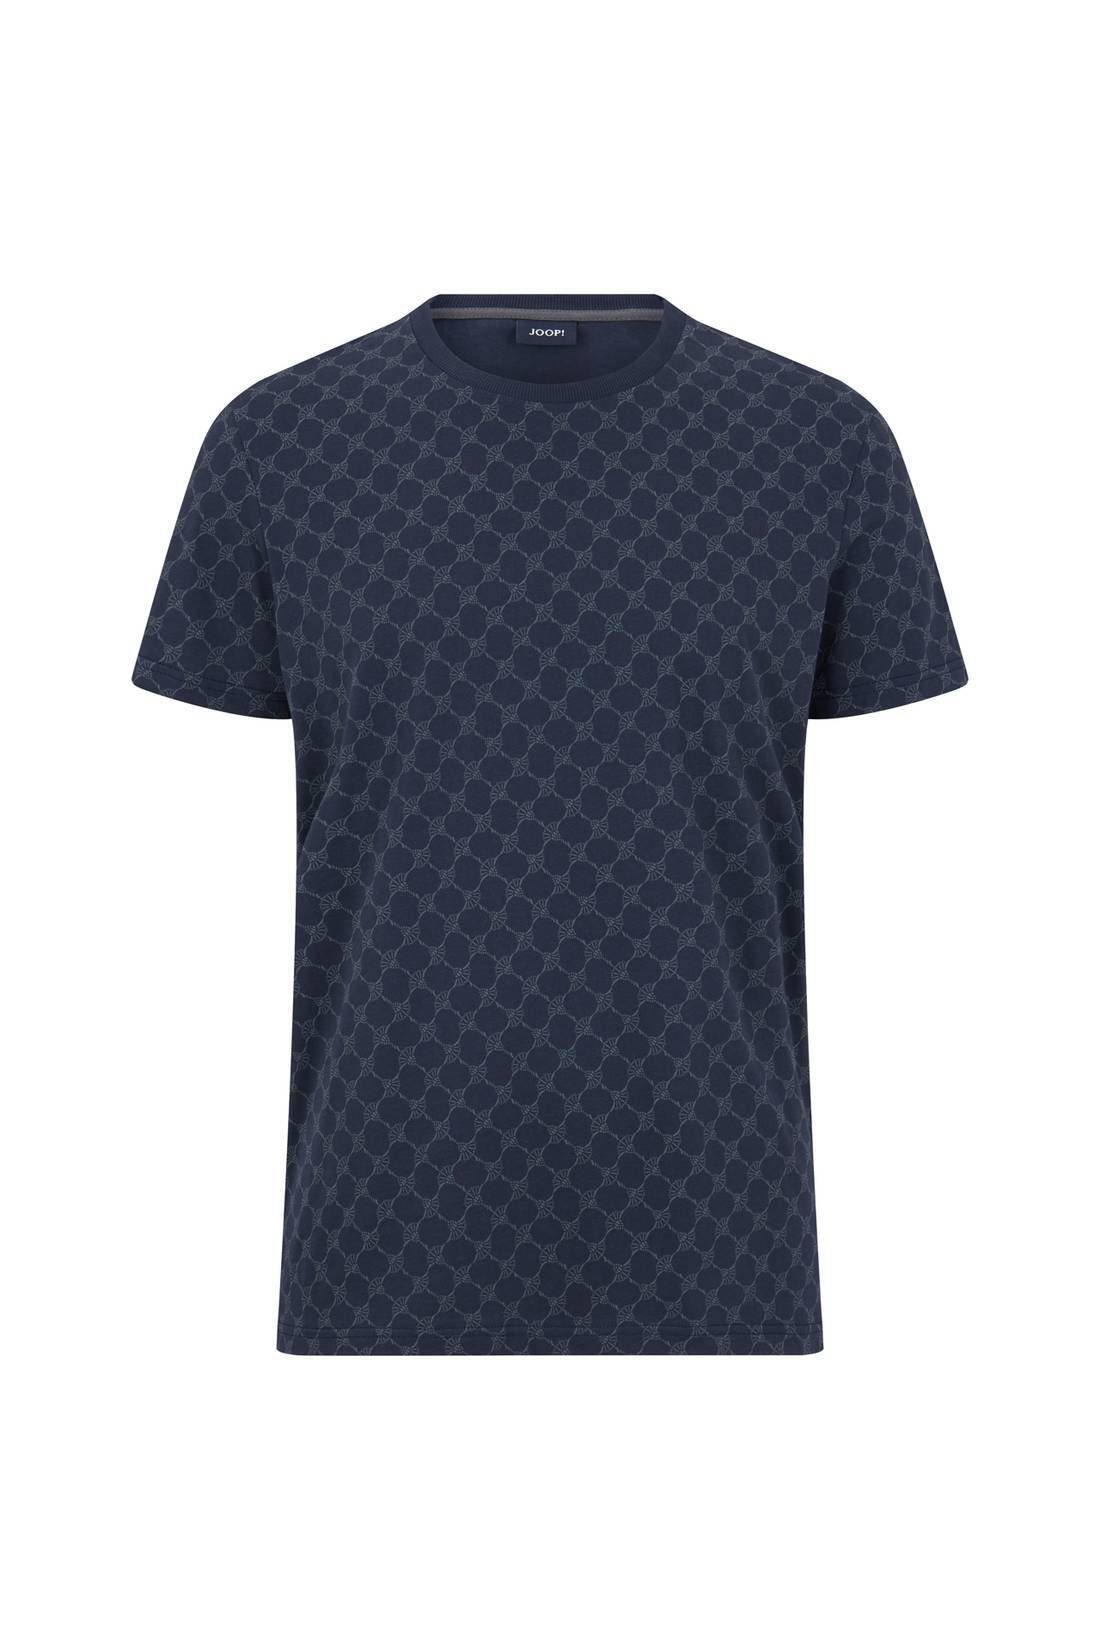 Joop! T-Shirt Loungewear, Blau Rundhals, - Halbarm Herren T-Shirt